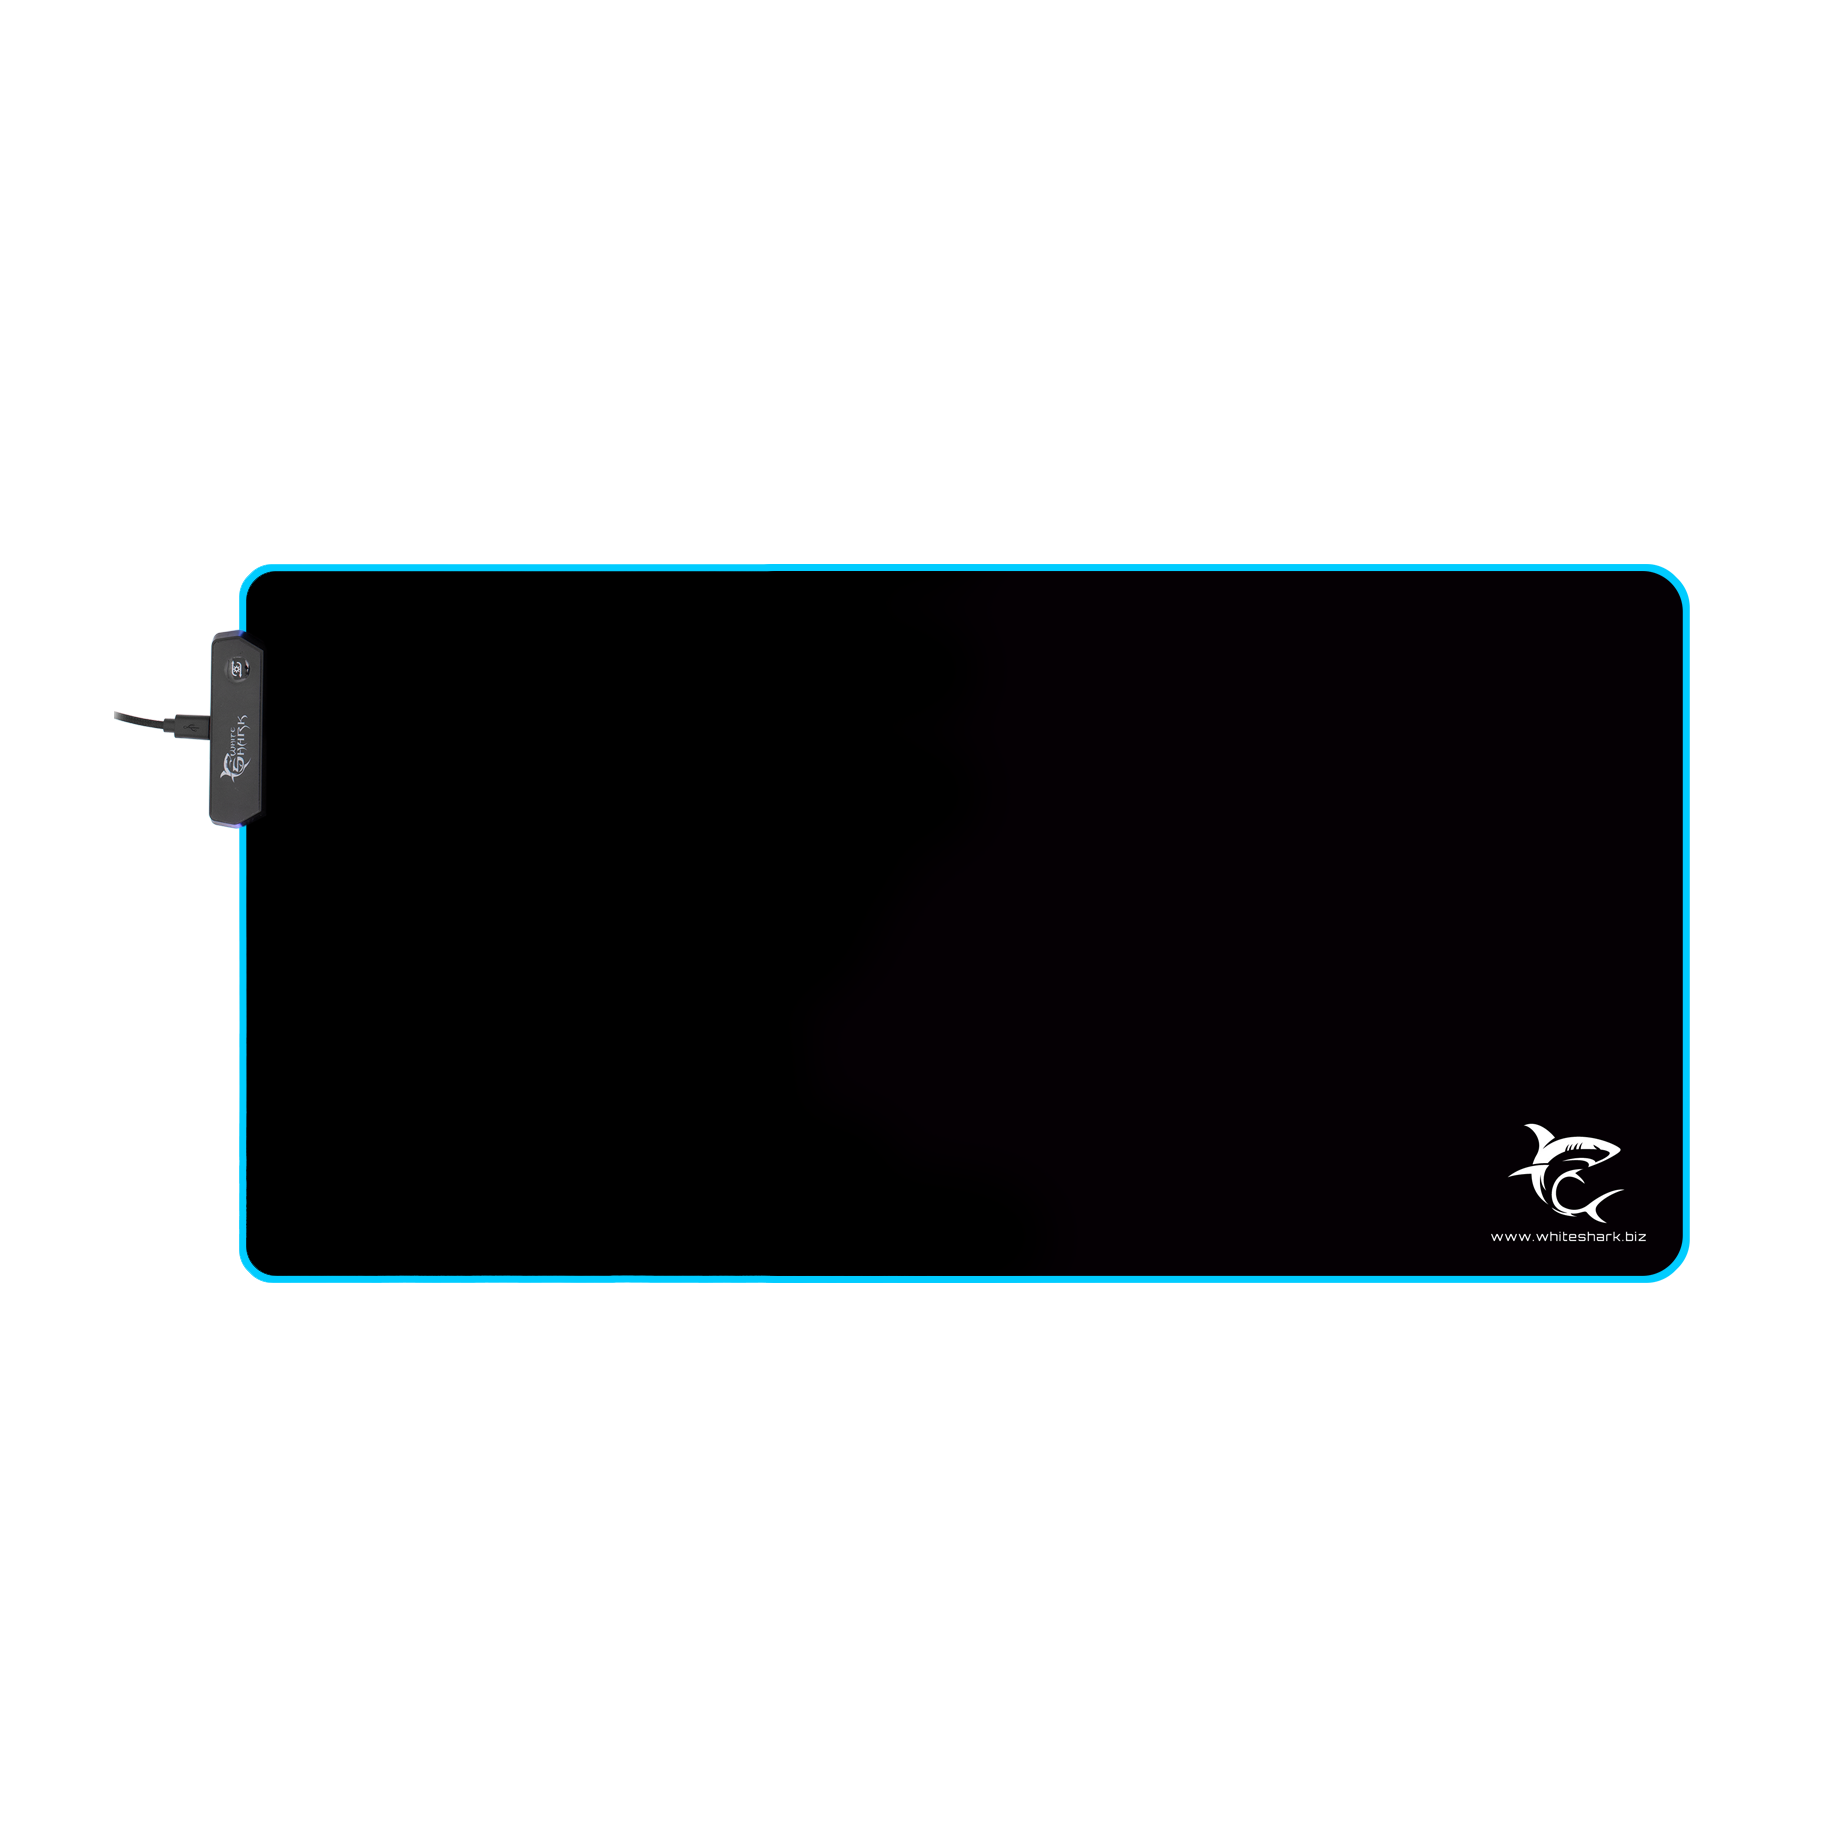 MousePad White Shark MP-1862 LUMINOS XL, 80x35cm, Iluminare Led, Negru 80x35cm imagine Black Friday 2021